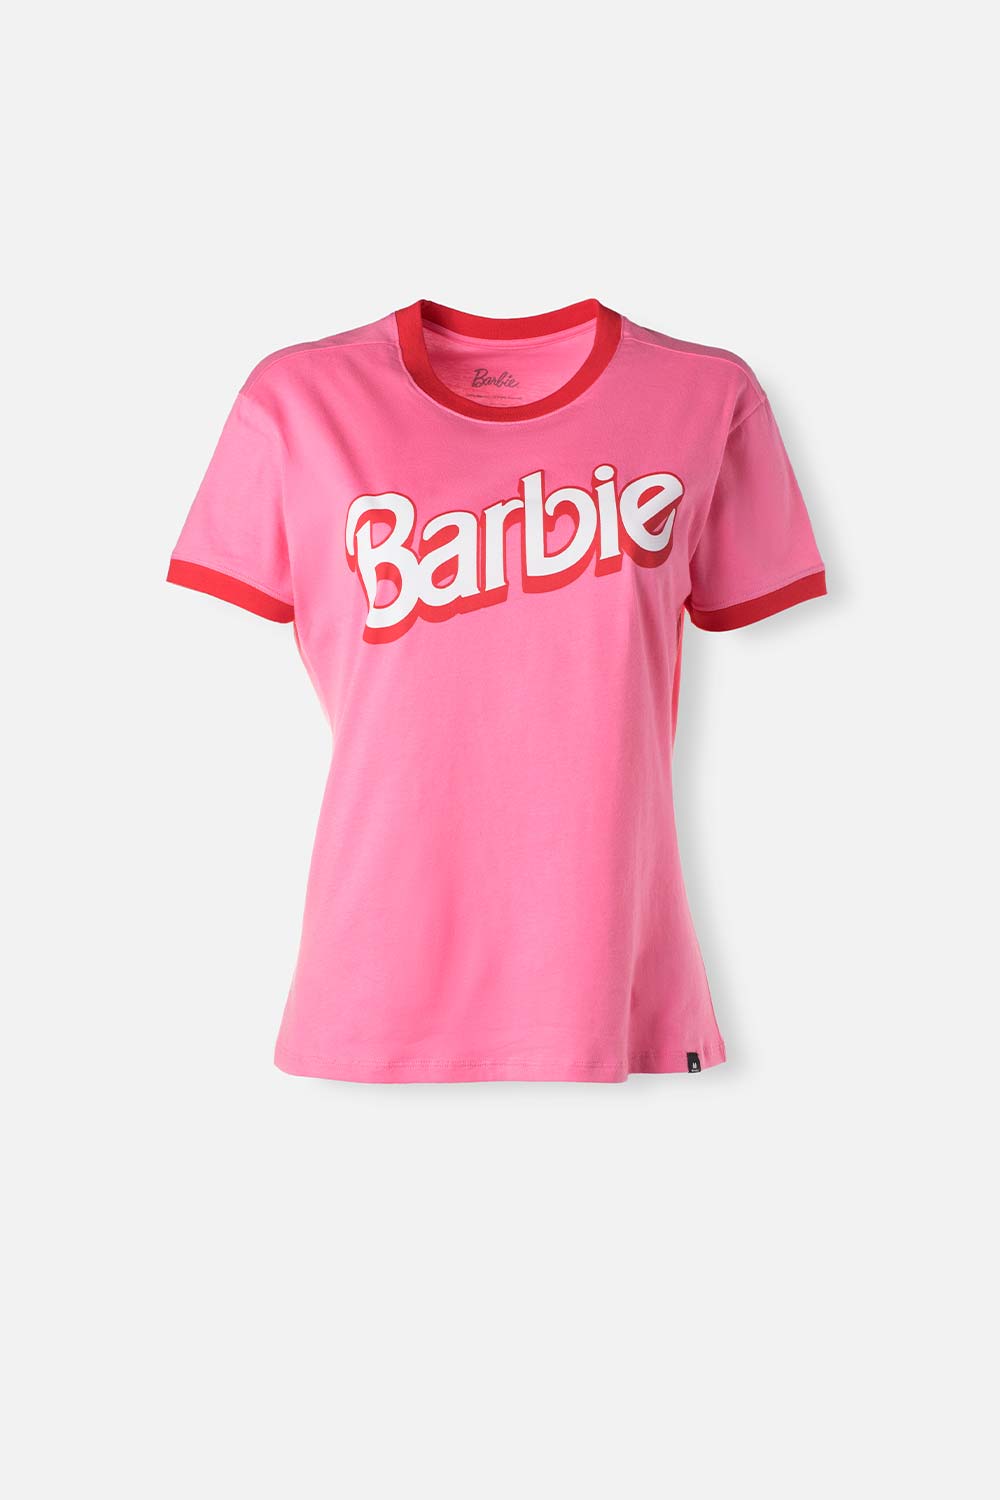 Camiseta de Barbie rosada manga corta para mujer M-0